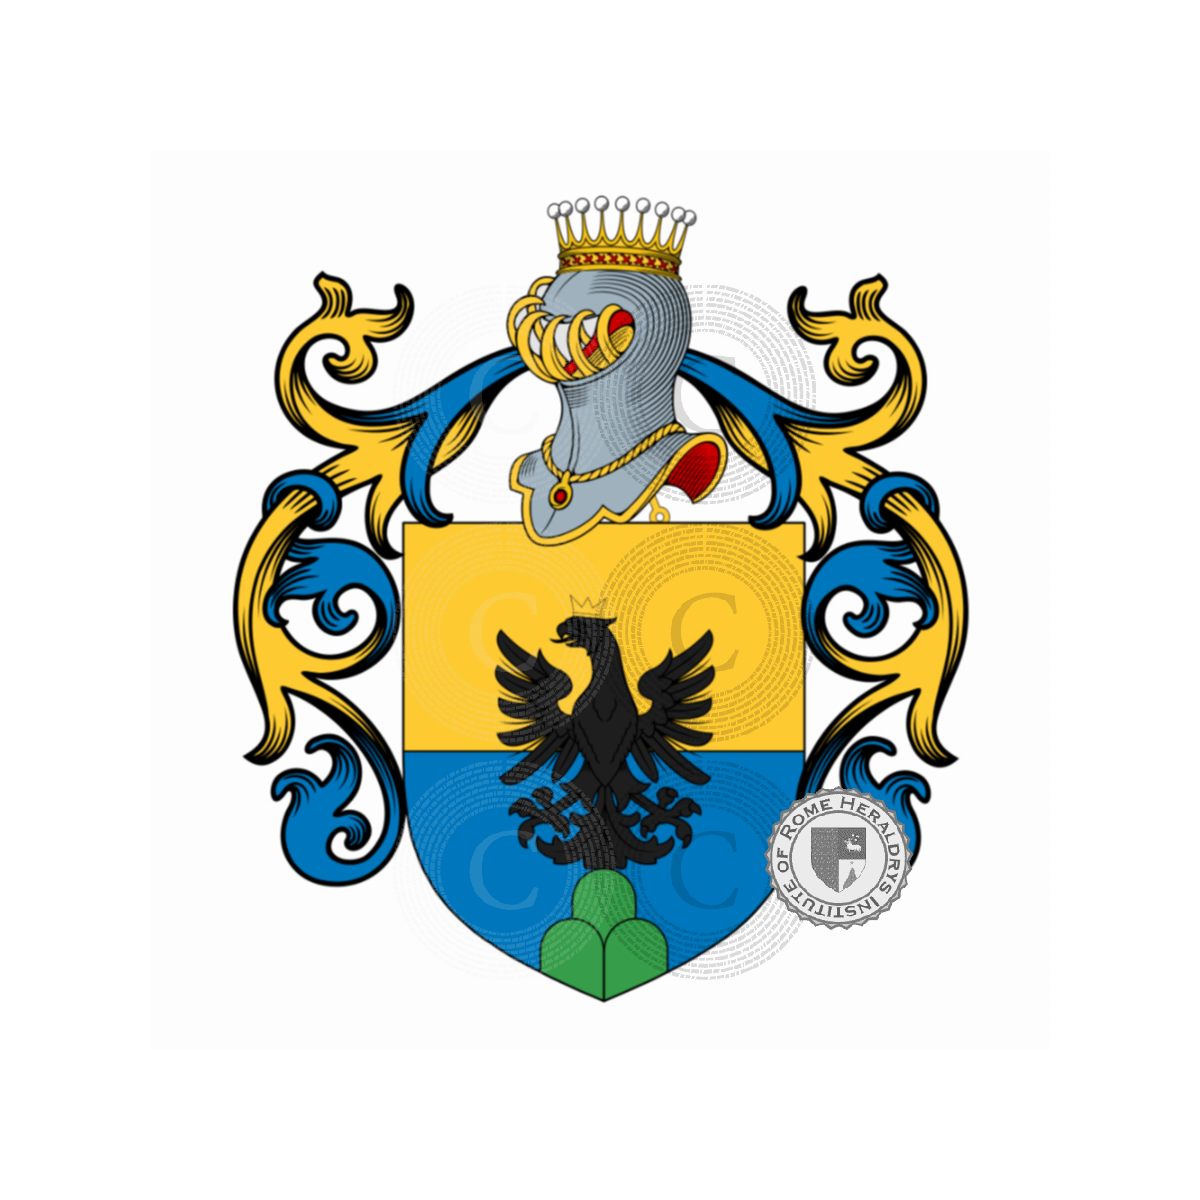 Coat of arms of familyFederici